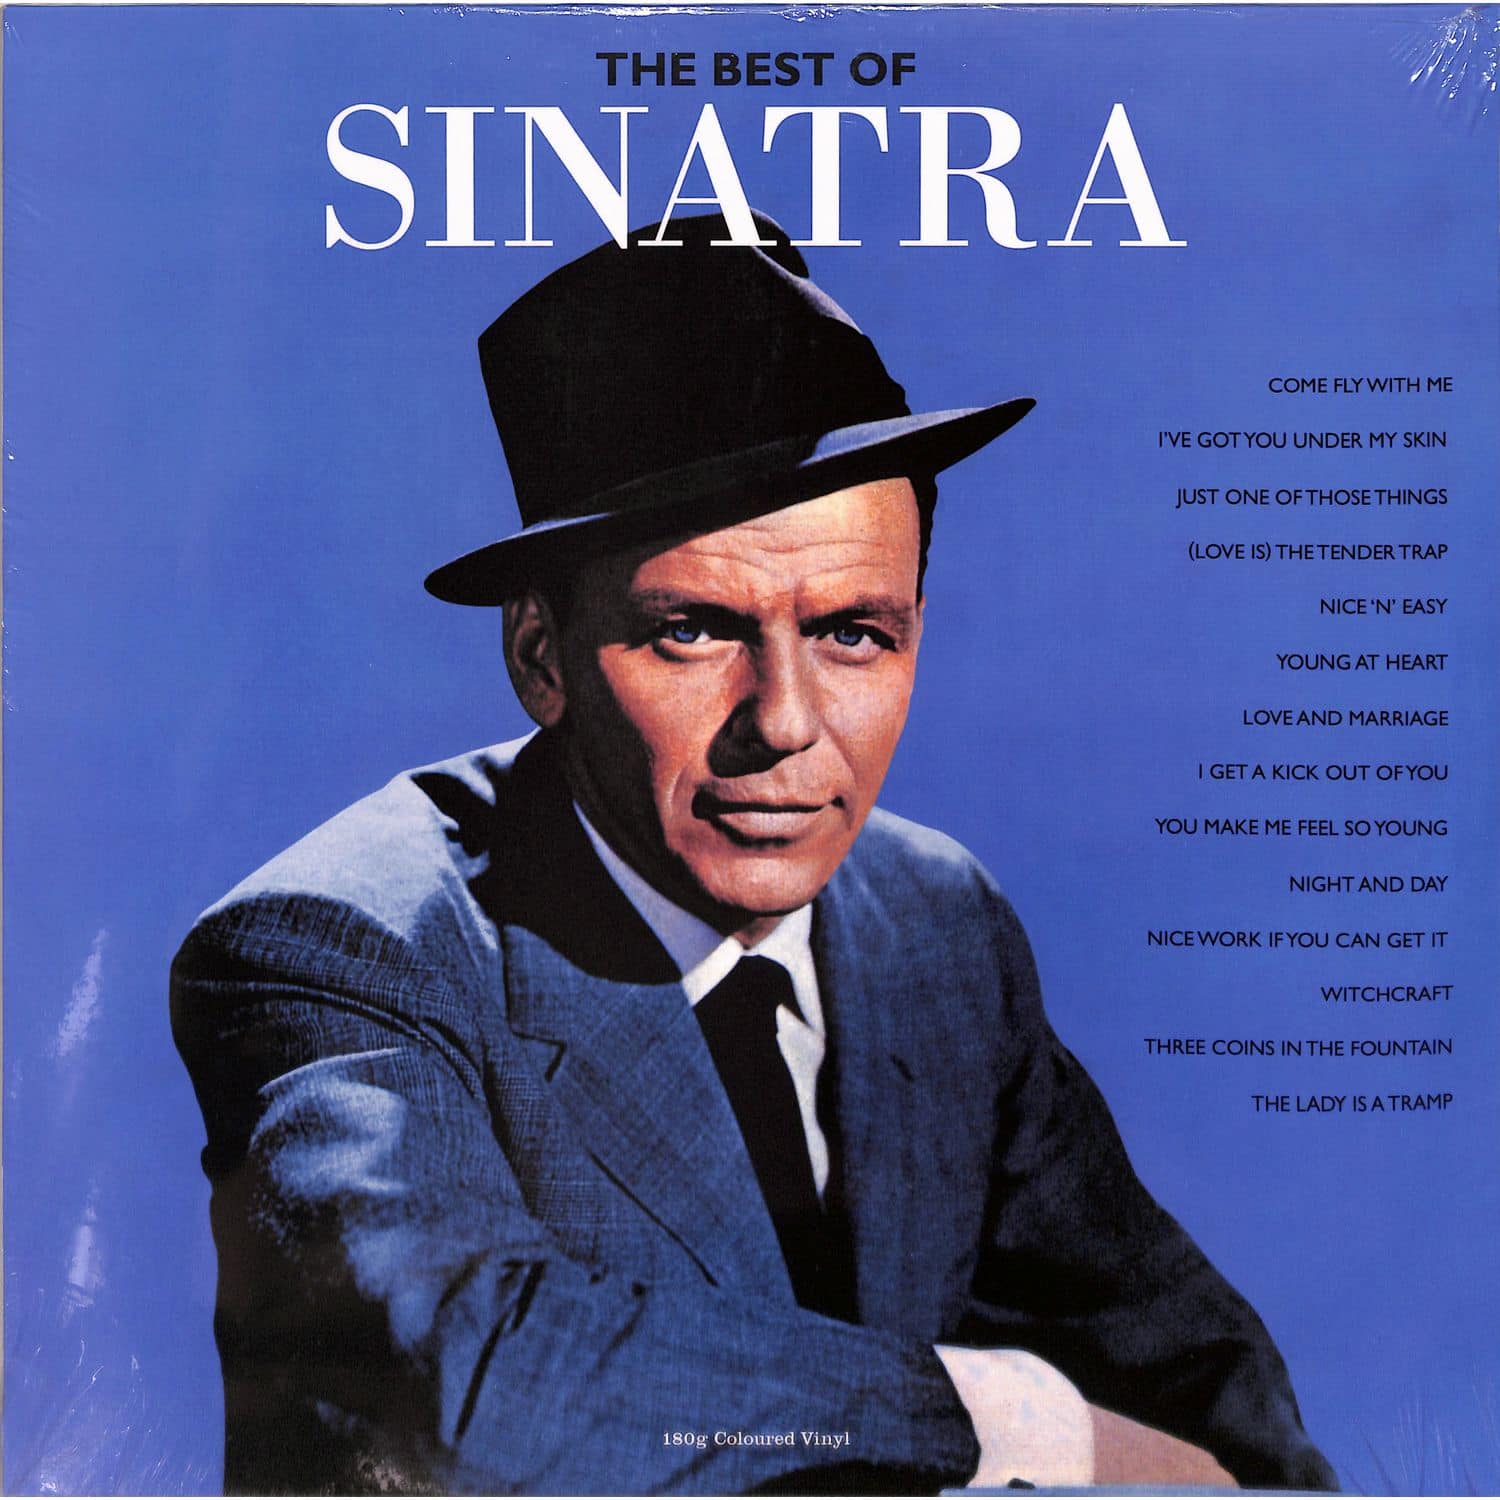 Frank Sinatra - BEST OF 